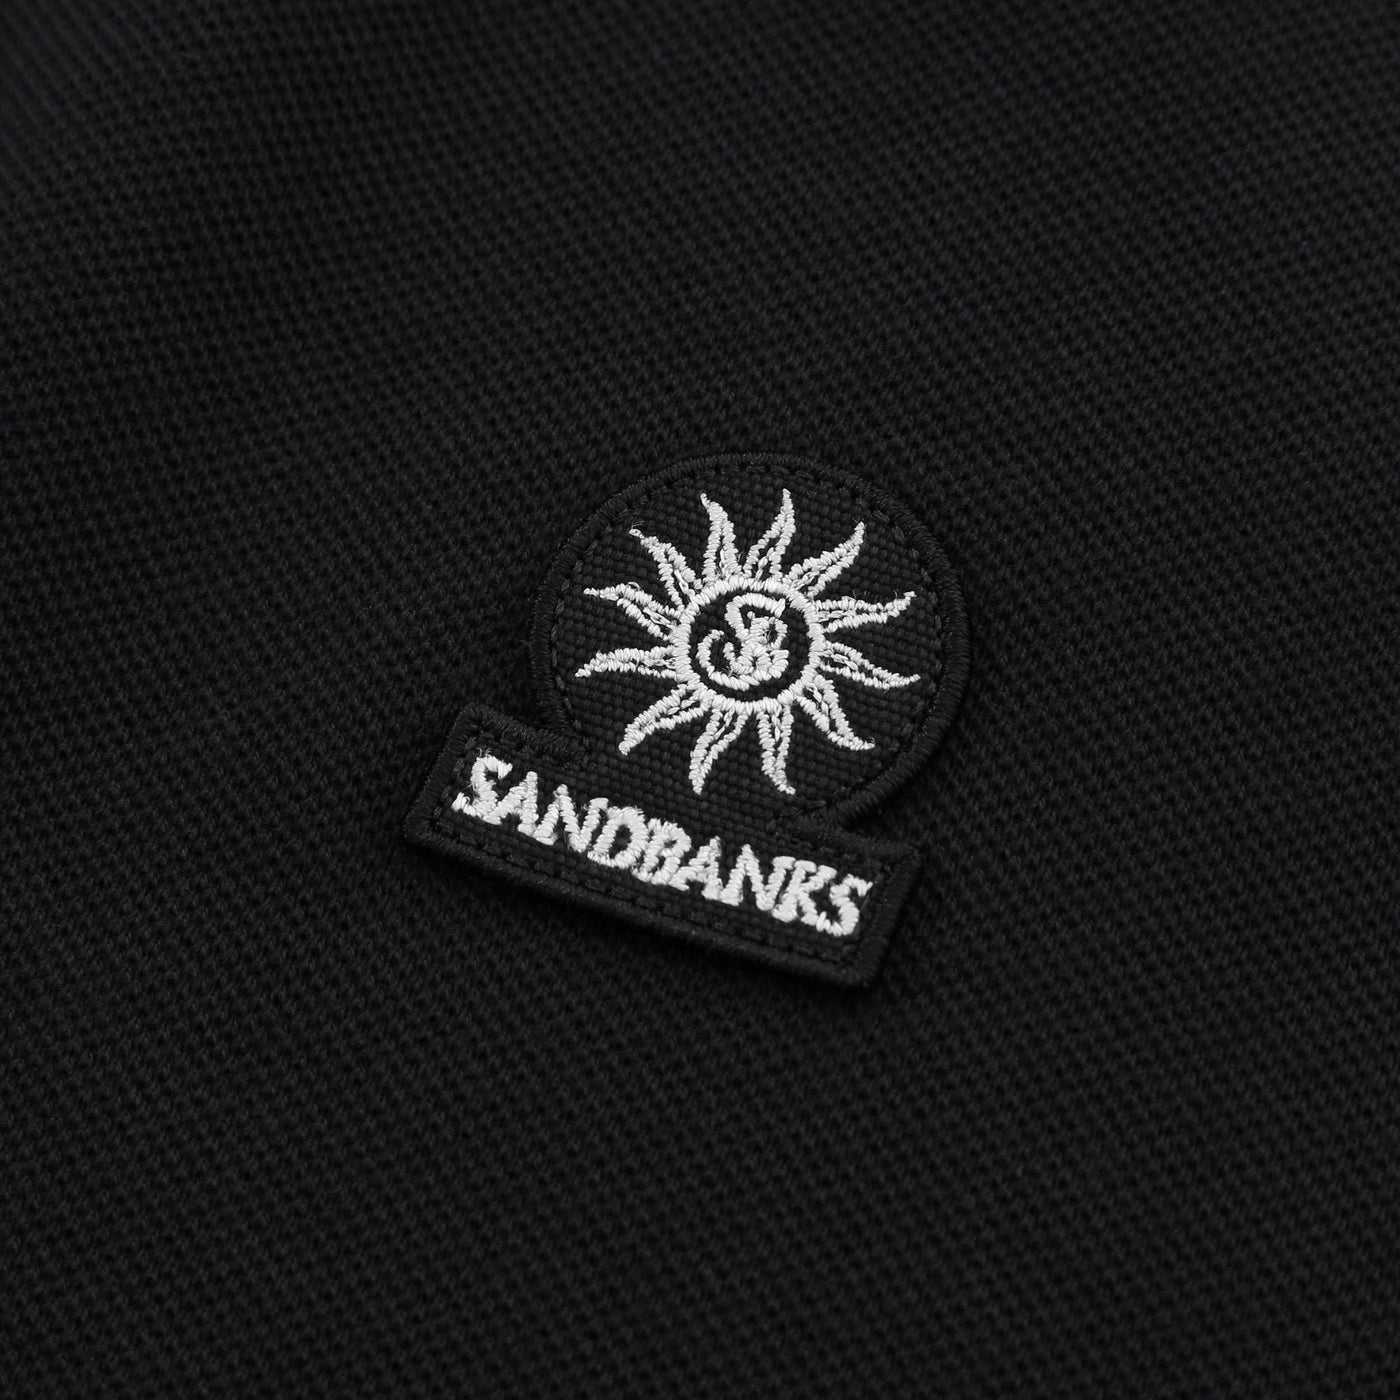 Sandbanks Badge Logo Tipped Polo Shirt in Black Logo